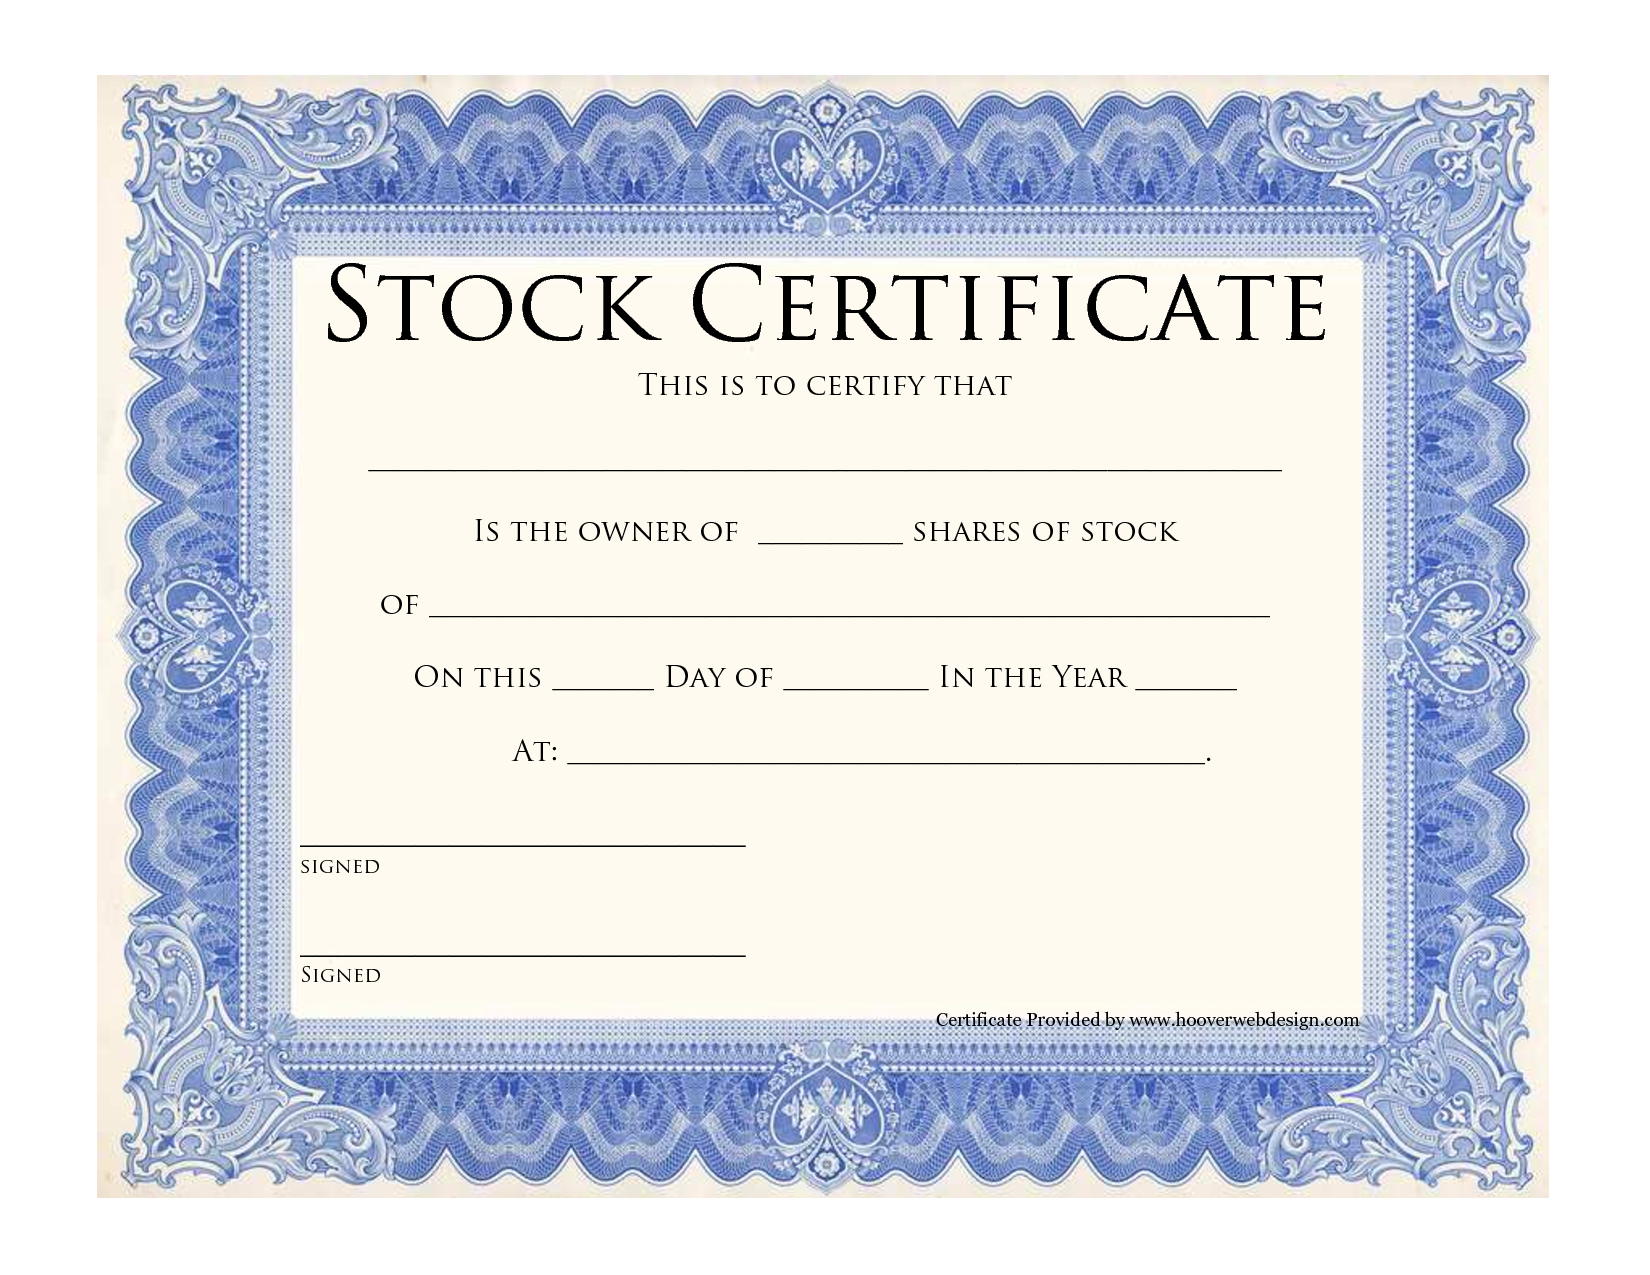 Blank Stock Certificate Template | Printable Stock Inside Corporate Bond Certificate Template